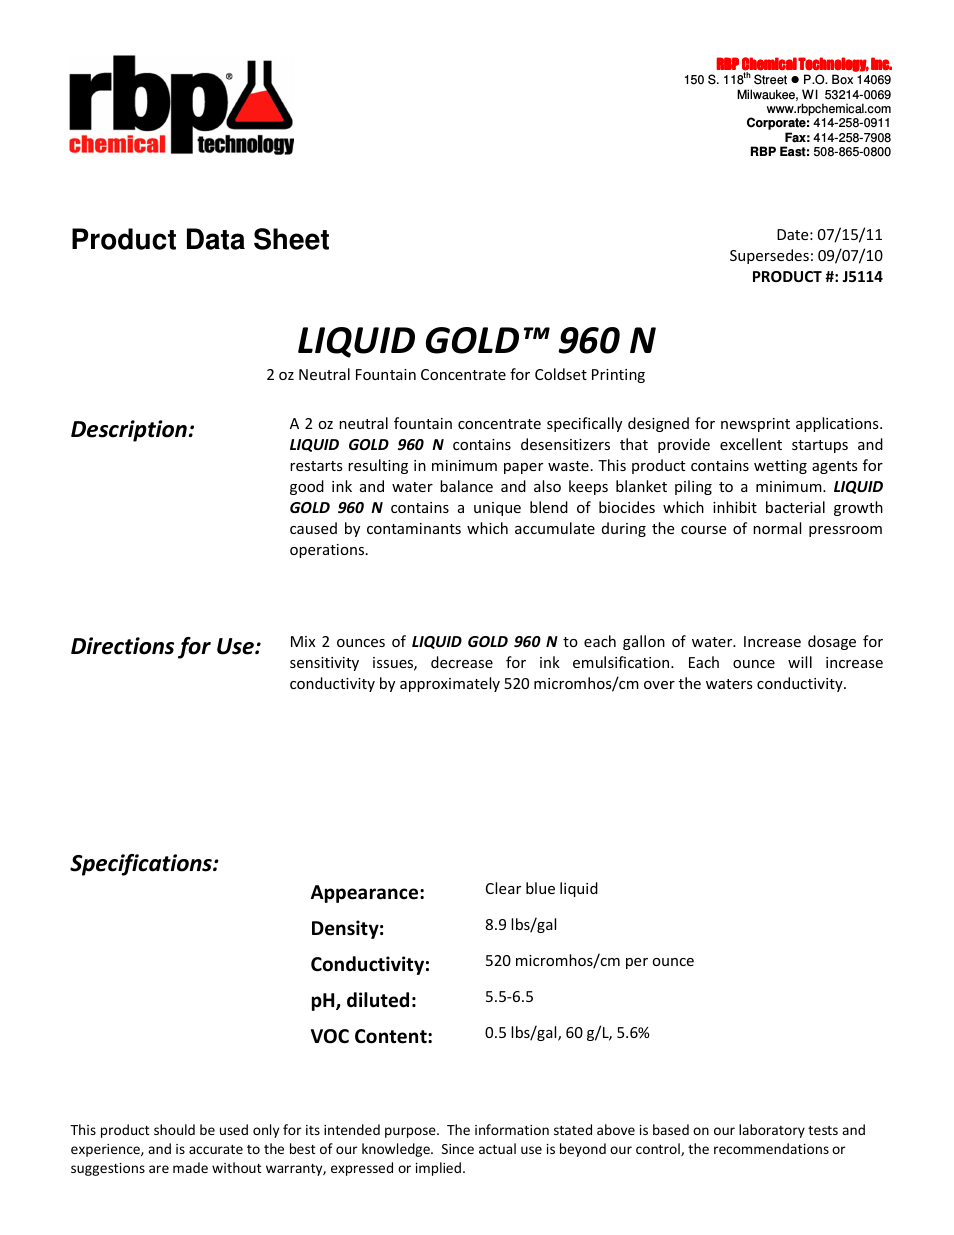 J5114 LIQUID GOLD 960N